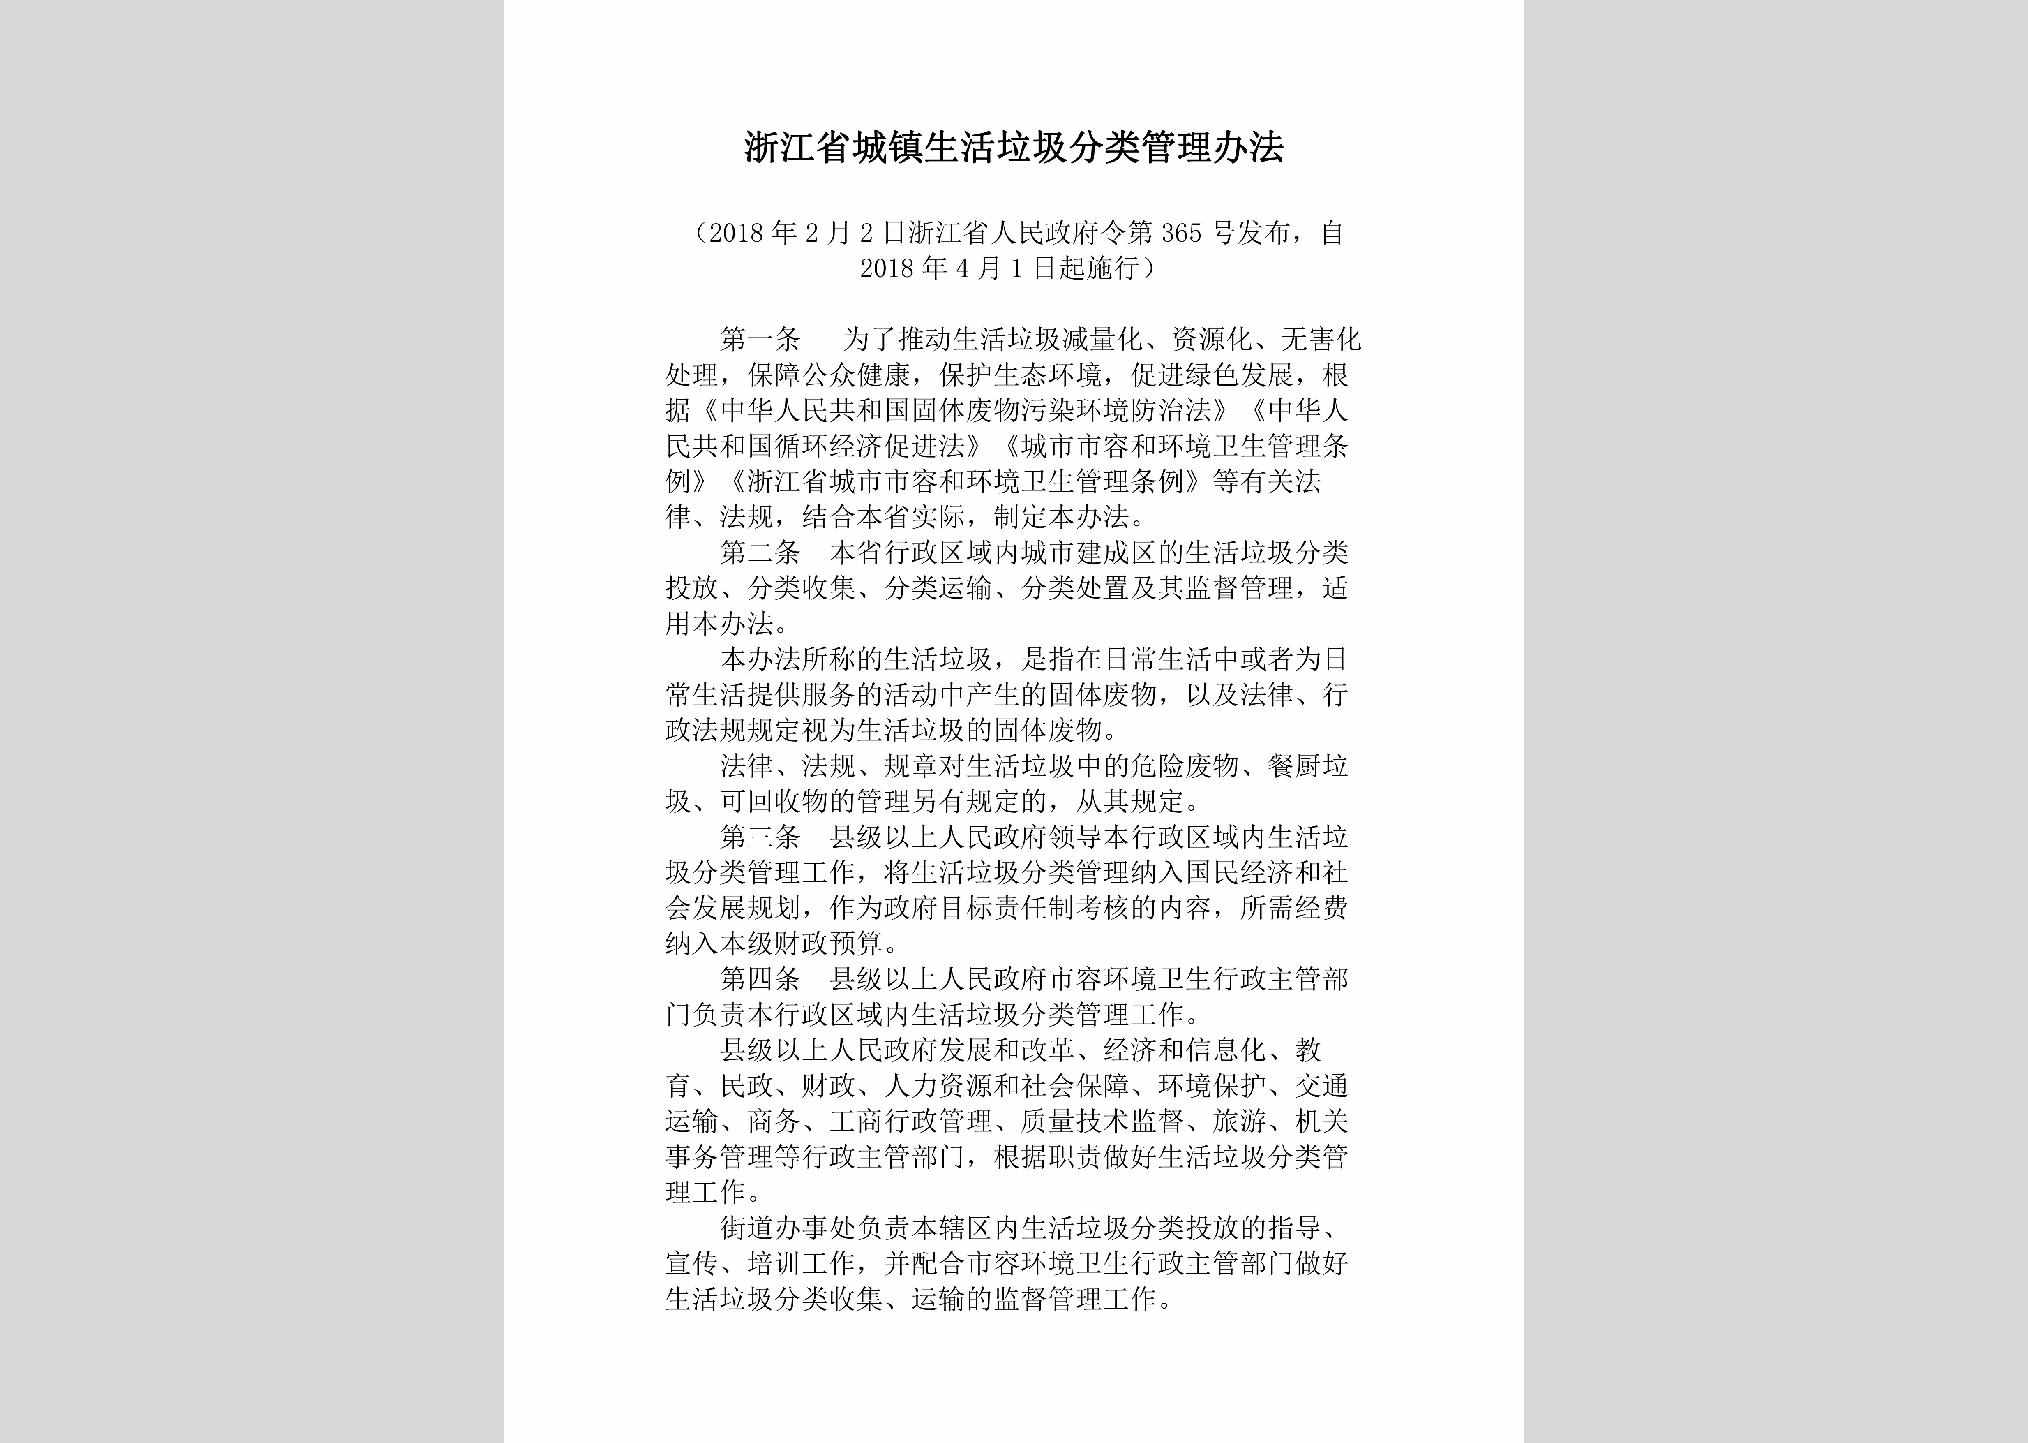 ZJ-CZSHLJFL-2018：浙江省城镇生活垃圾分类管理办法